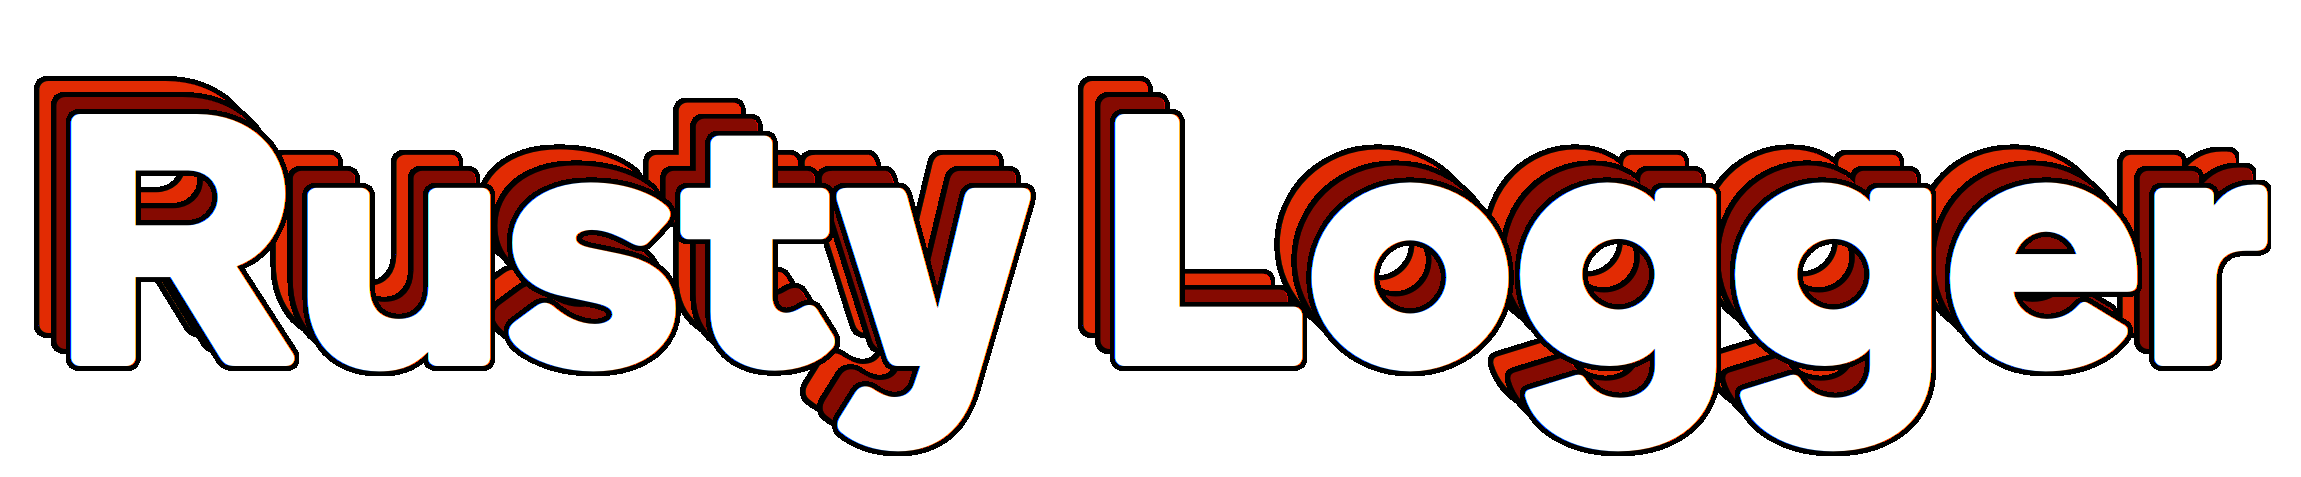 rusty logger logo